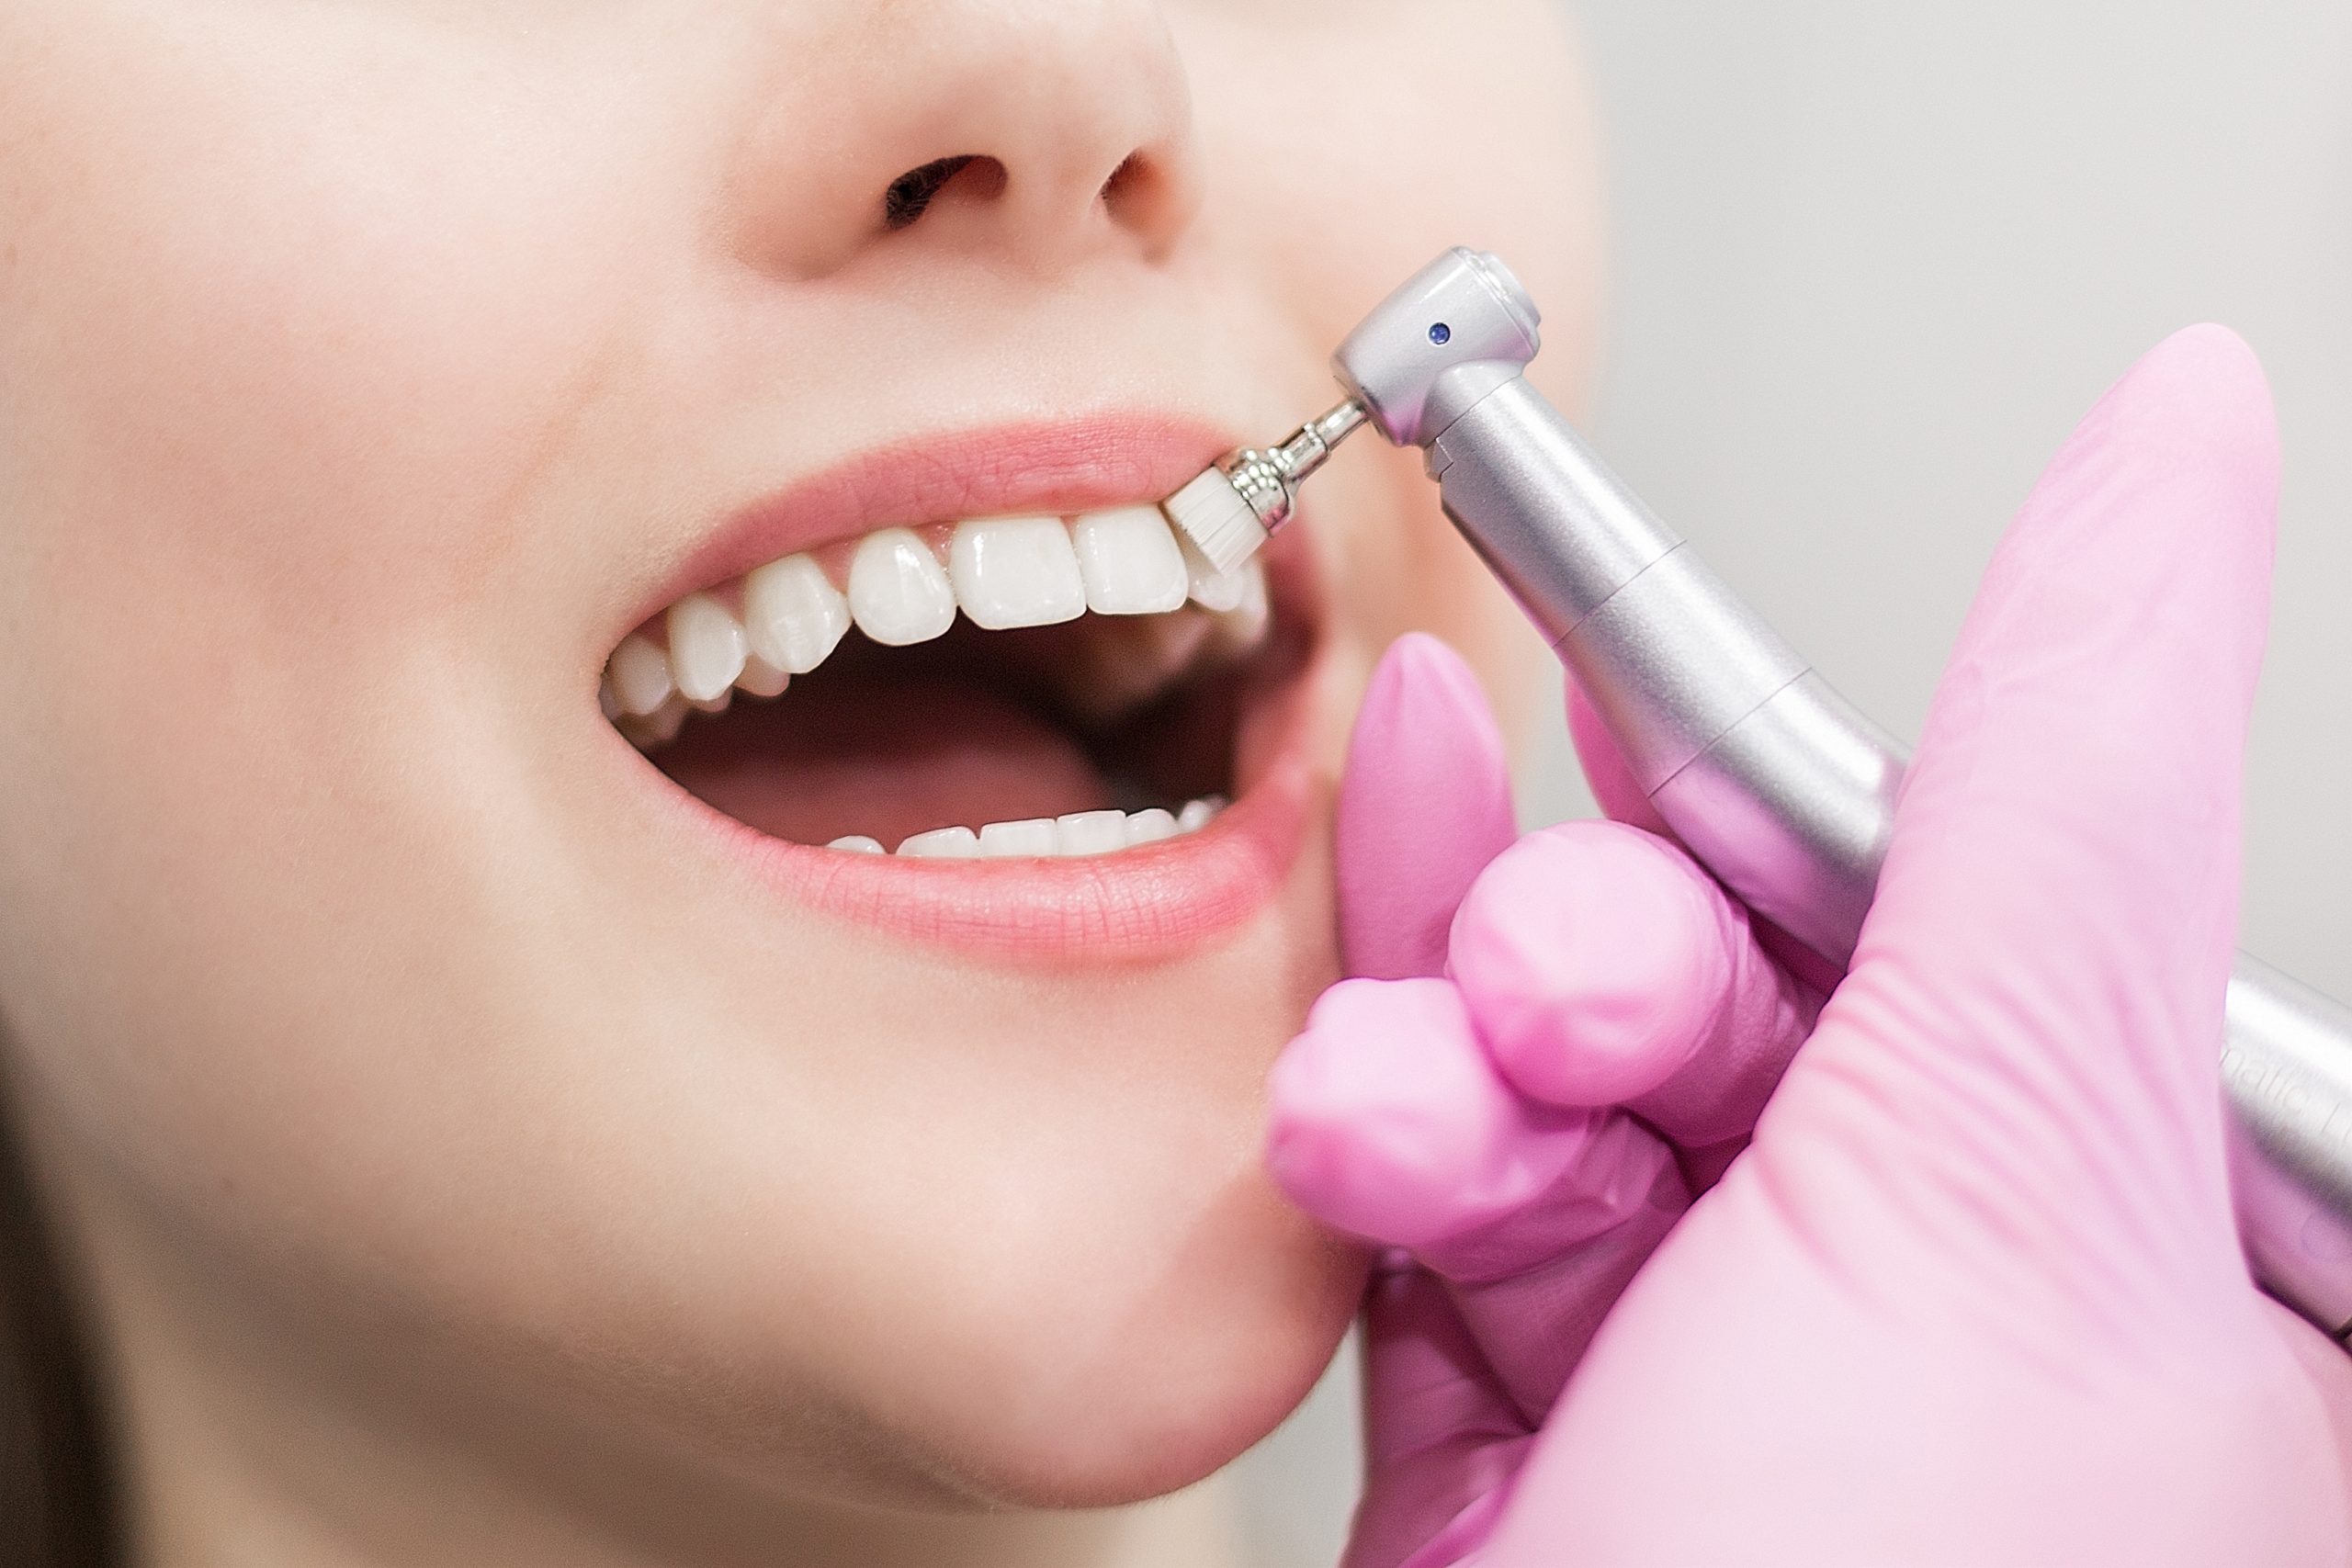 Dentist Brushes Teeth Young Girl Teeth Whitening 2023 11 27 05 33 35 Utc